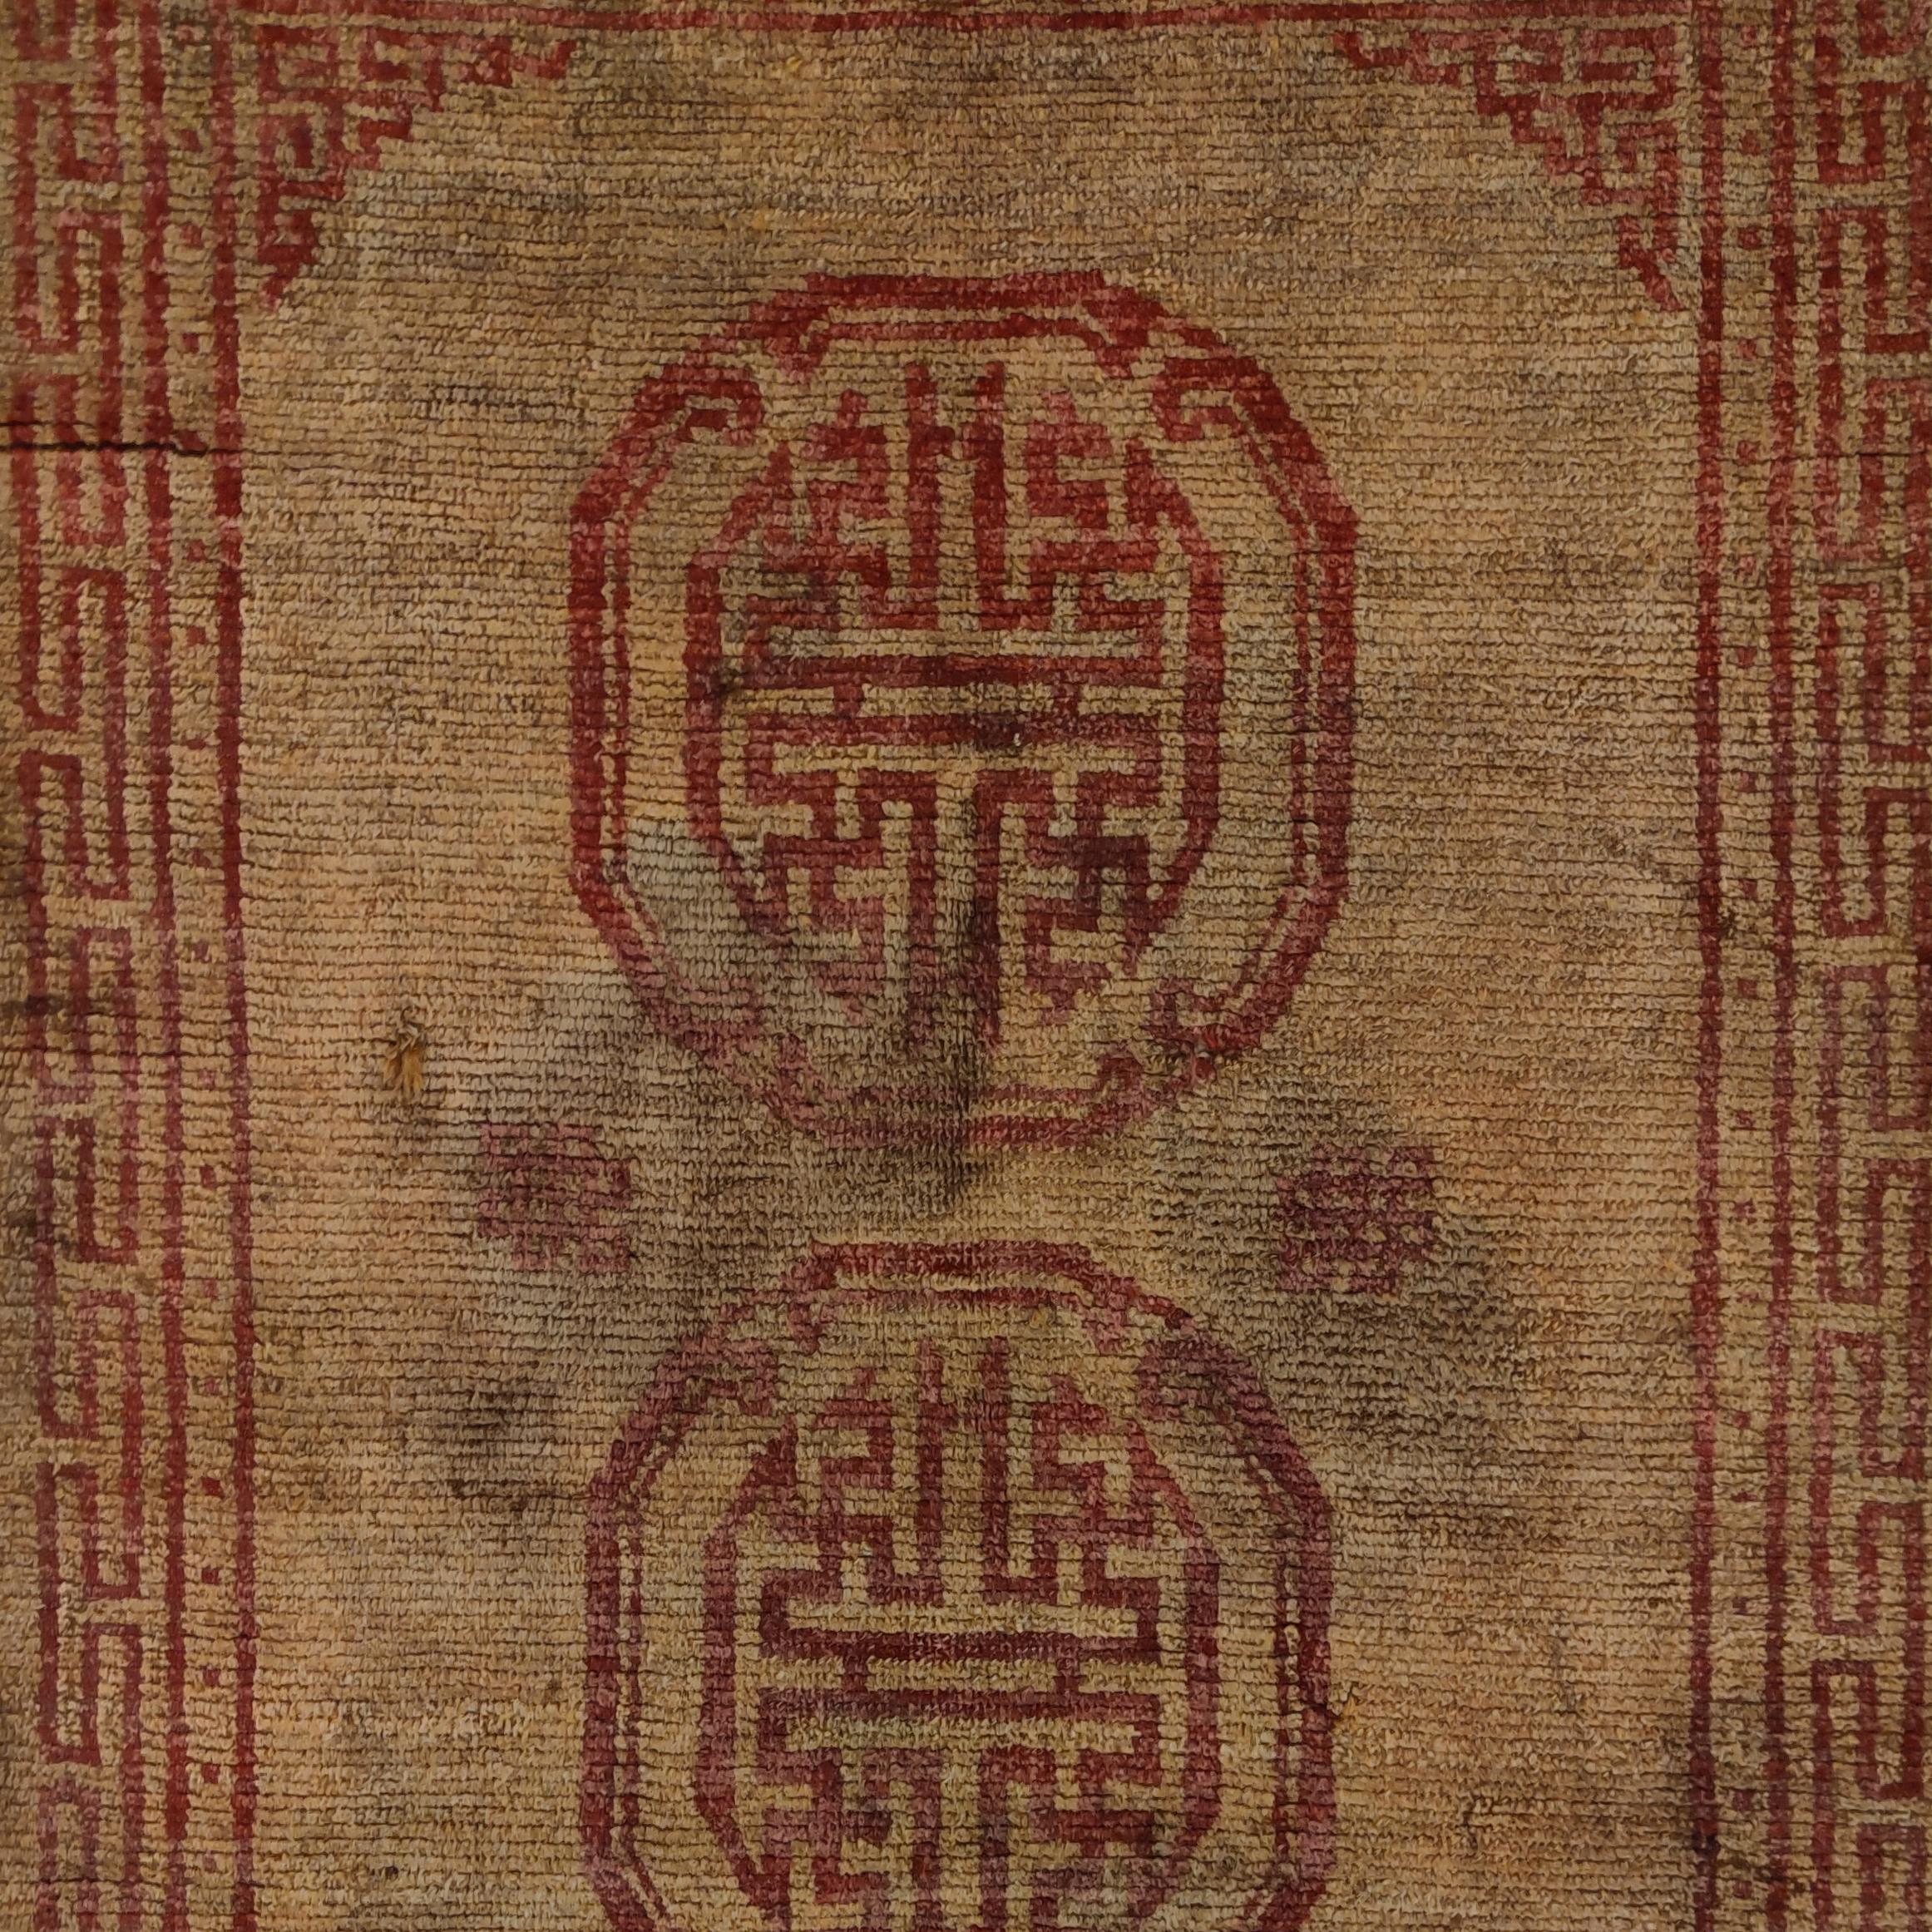 Wool Antique Tibetan Meditation Rug with Three Mandalas For Sale